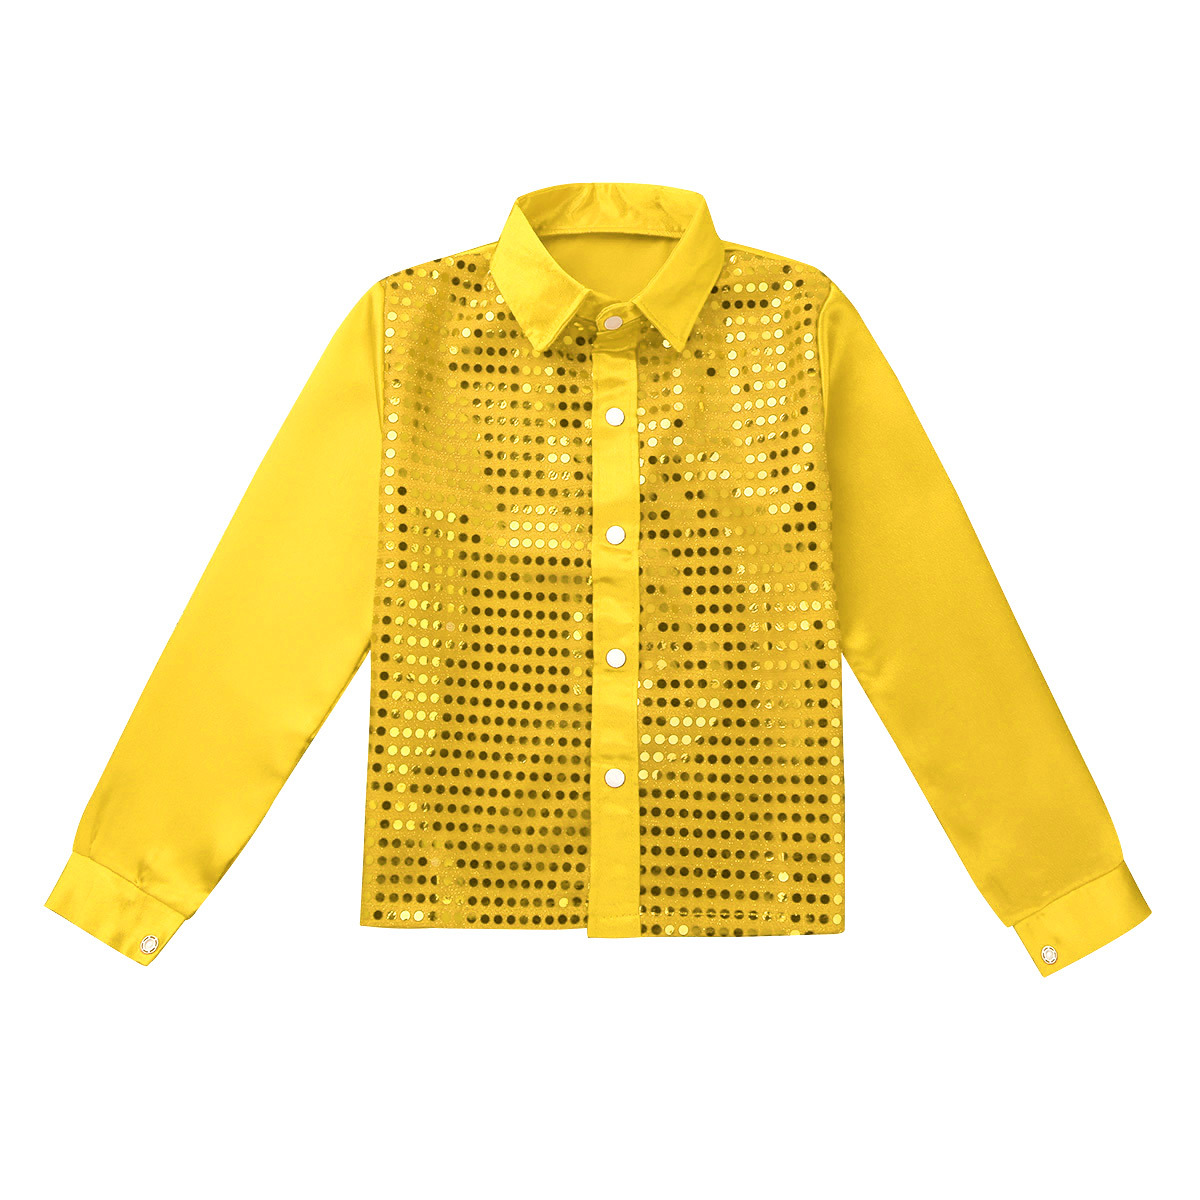 YiZYiF Kids Boys Long Sleeve Tops Shiny Sequined Shirt Jazz Dance Costume - image 4 of 7